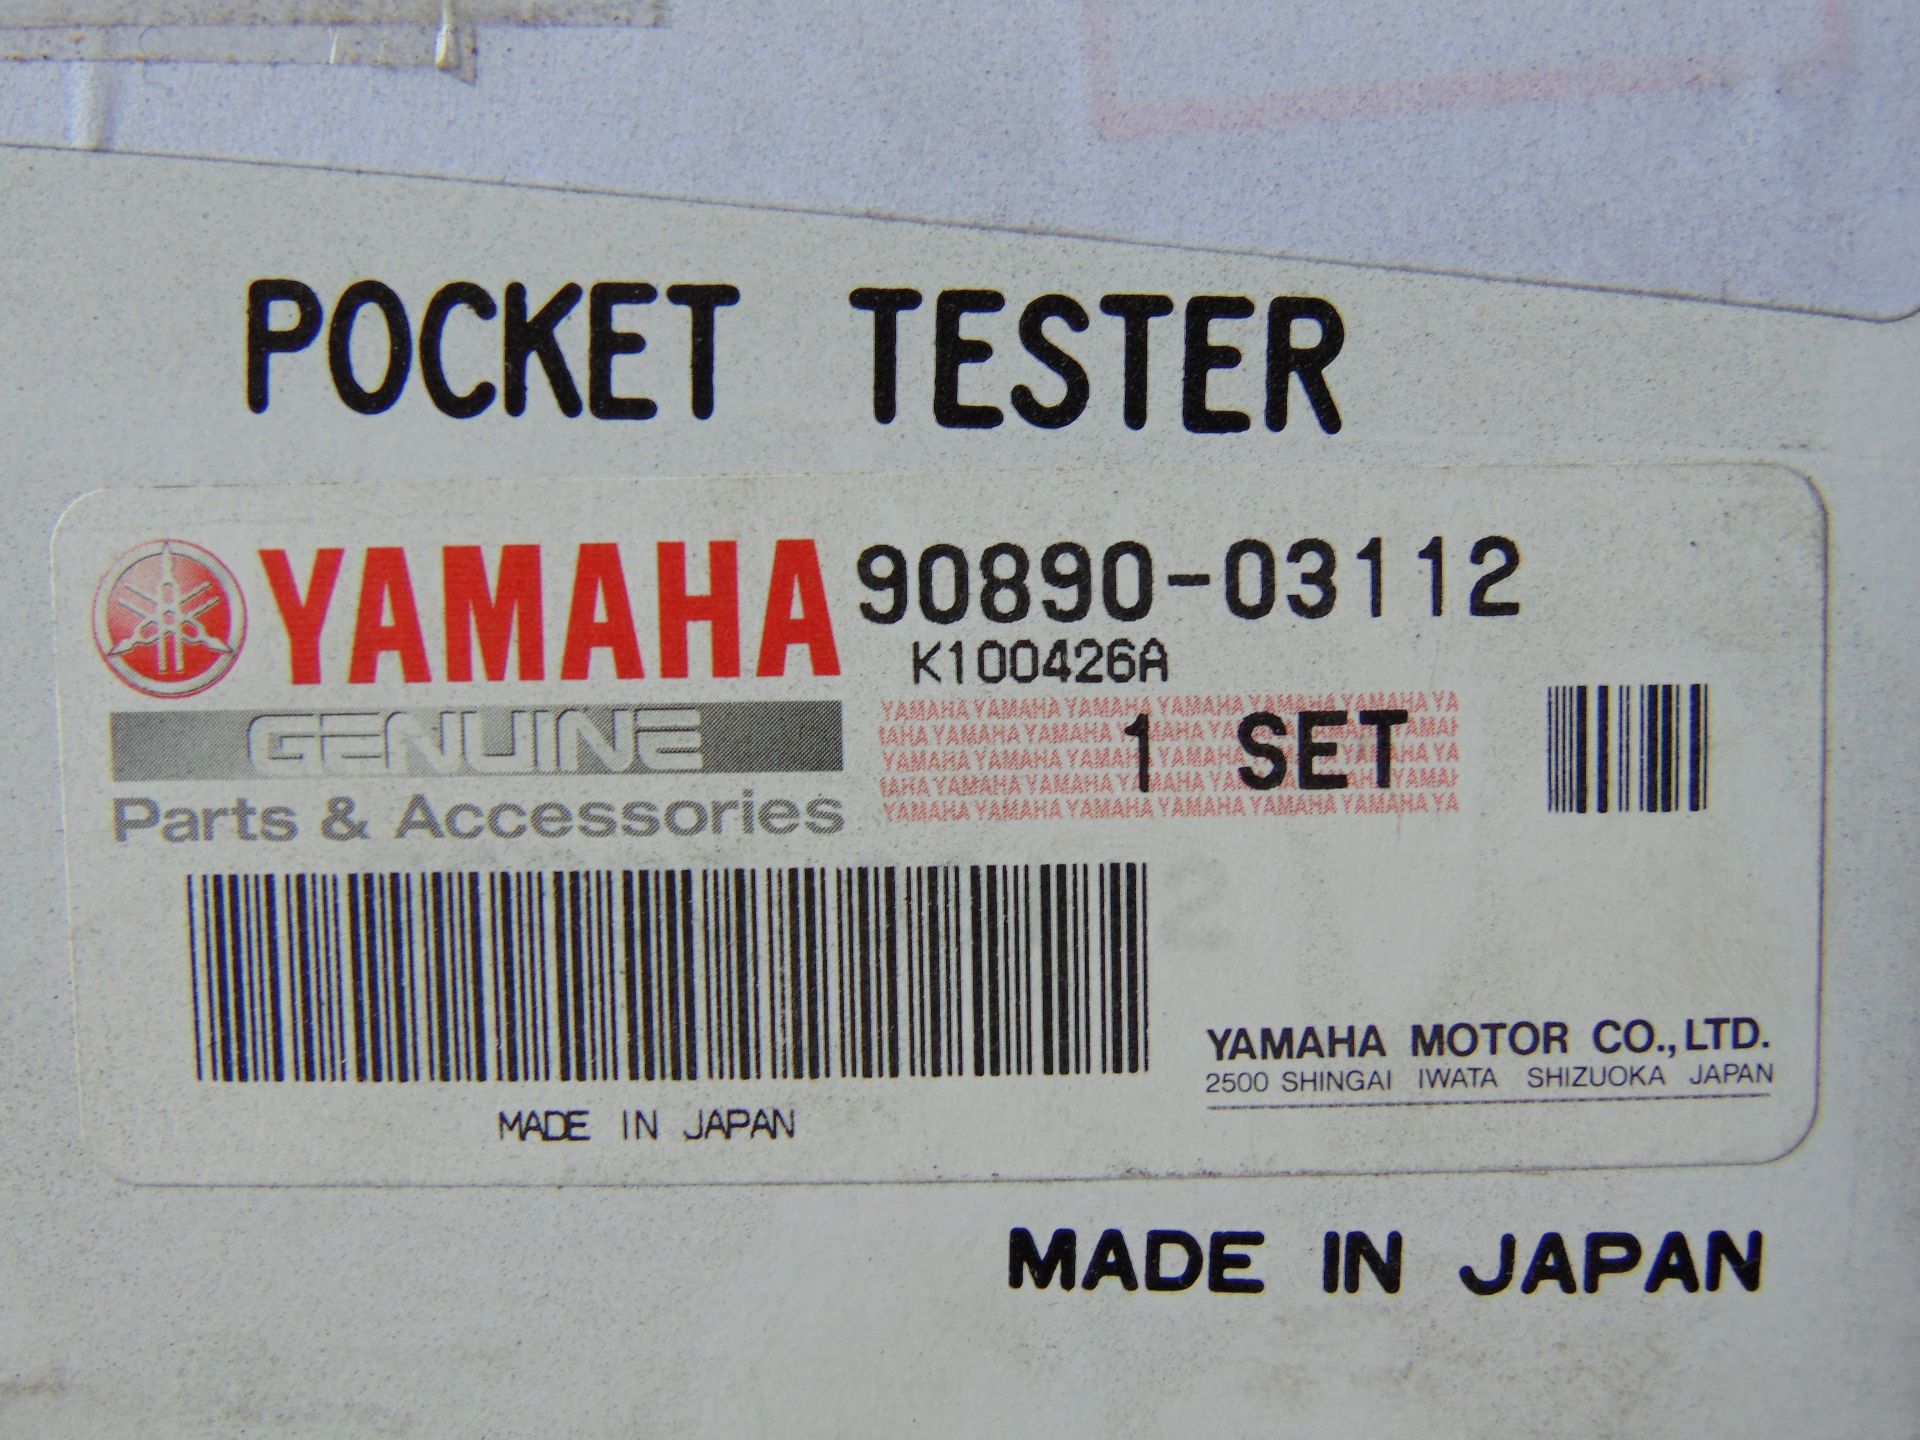 15 x Yamaha Pocket Testers/Mulitimeters P/no 90890-03112 - Image 6 of 6